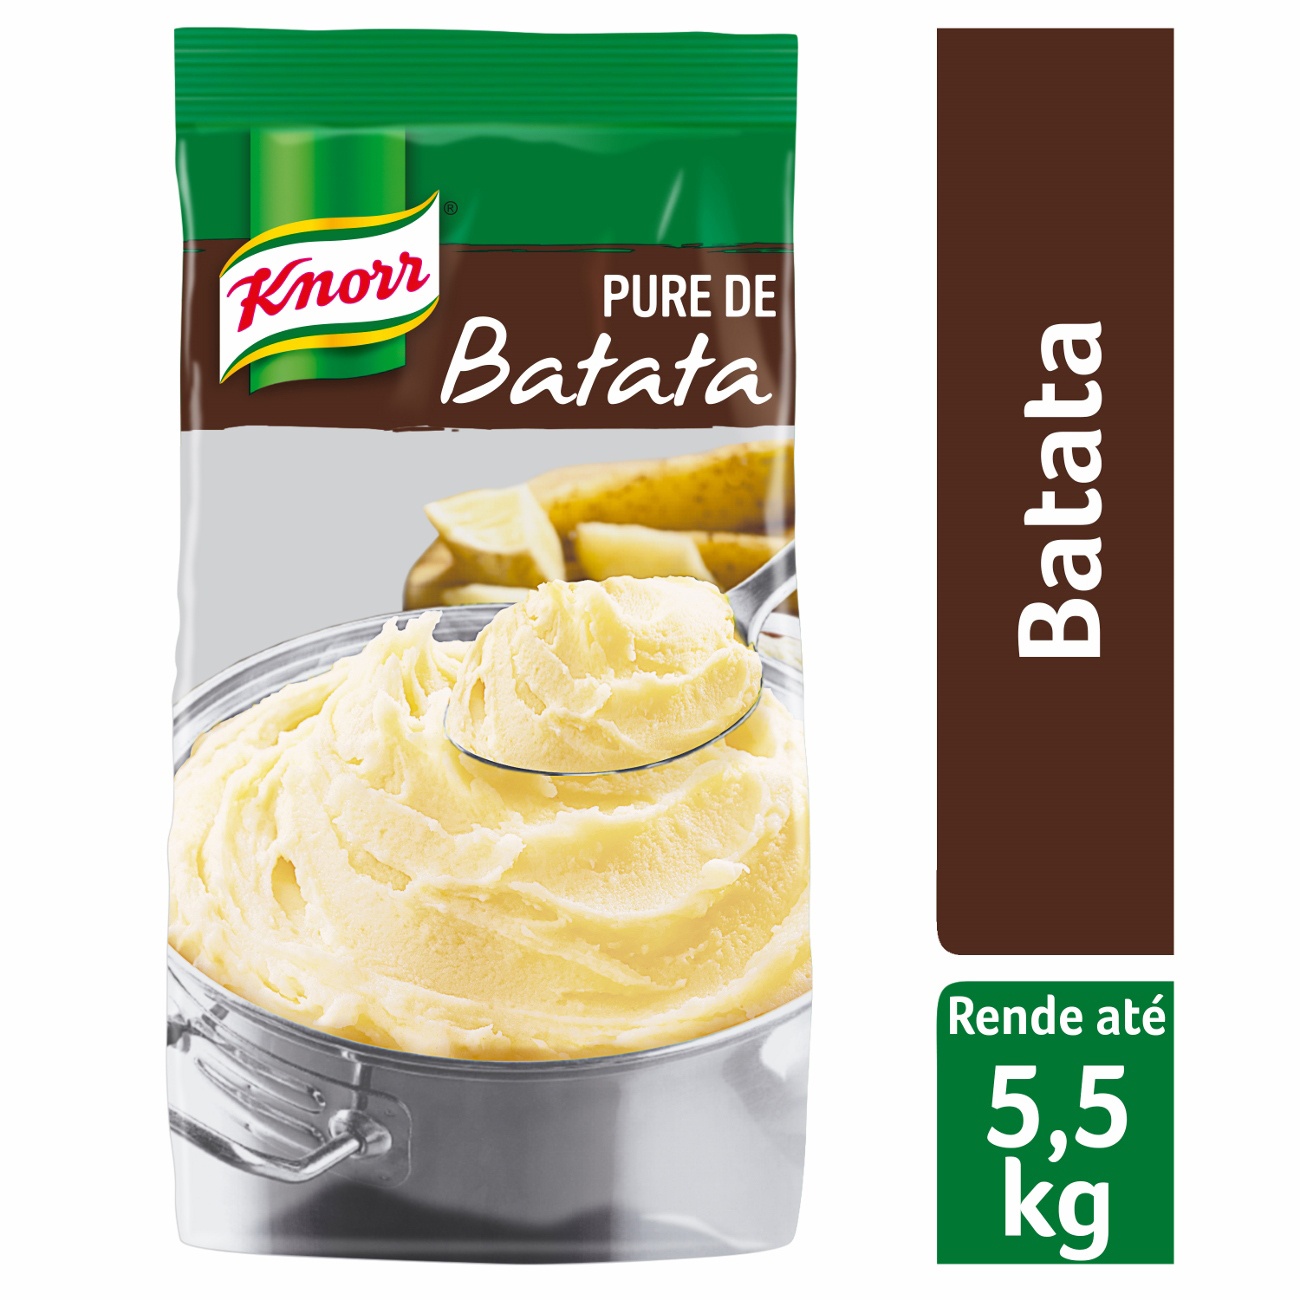 Pur� de Batata Knorr Pacote 1,01kg